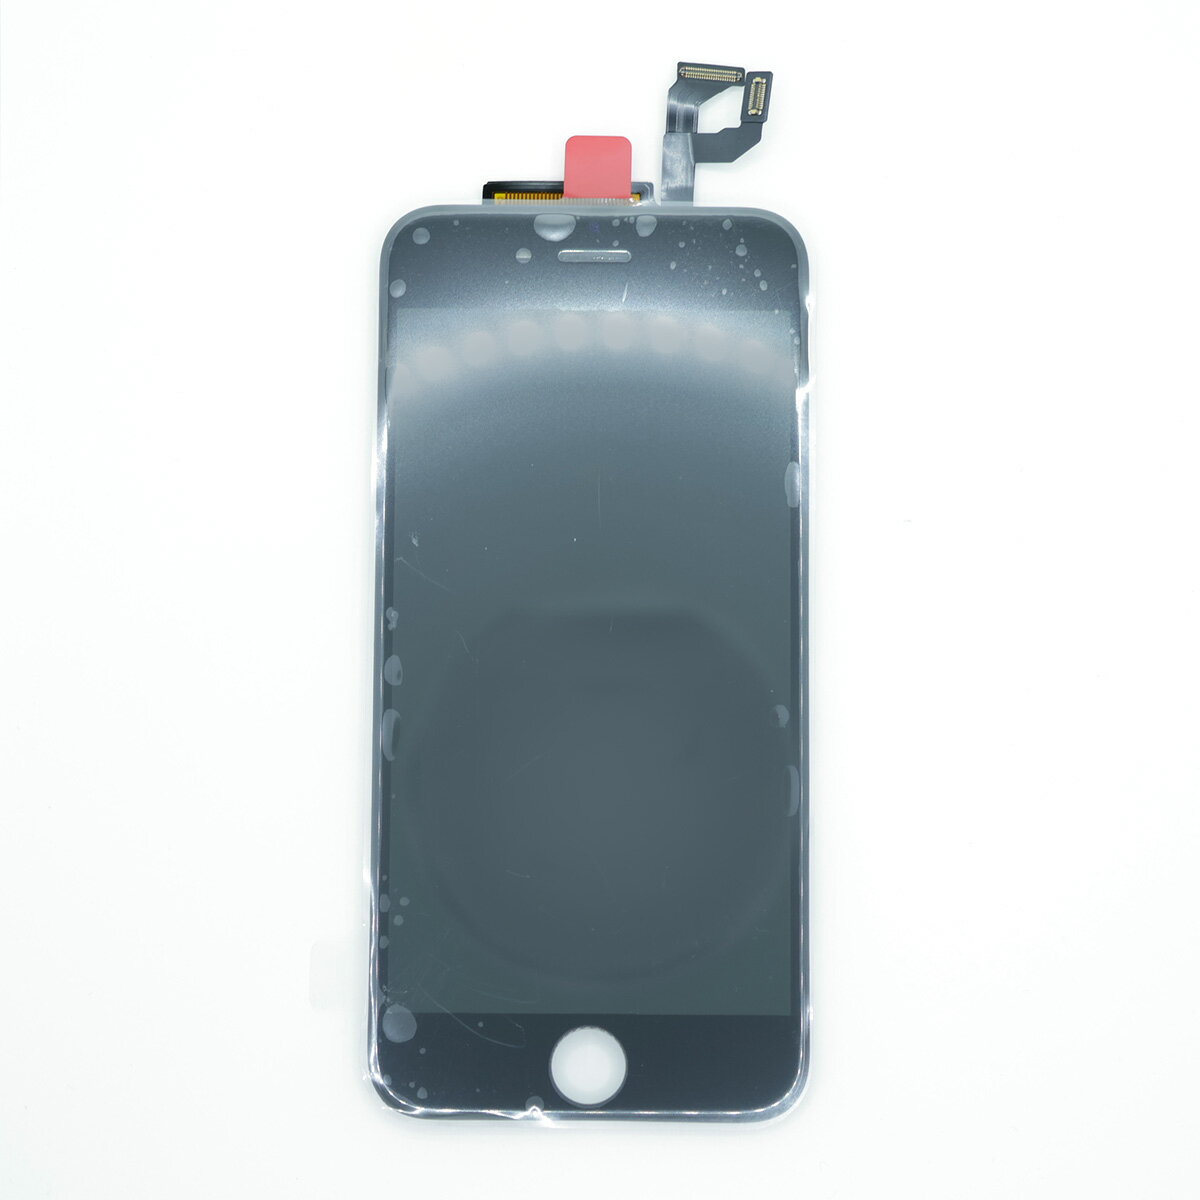 iPhone6s 互換 フロントアッセンブリー ブラック LCD 液晶 フロントパネル 画面 修理 交換用リペアパーツ